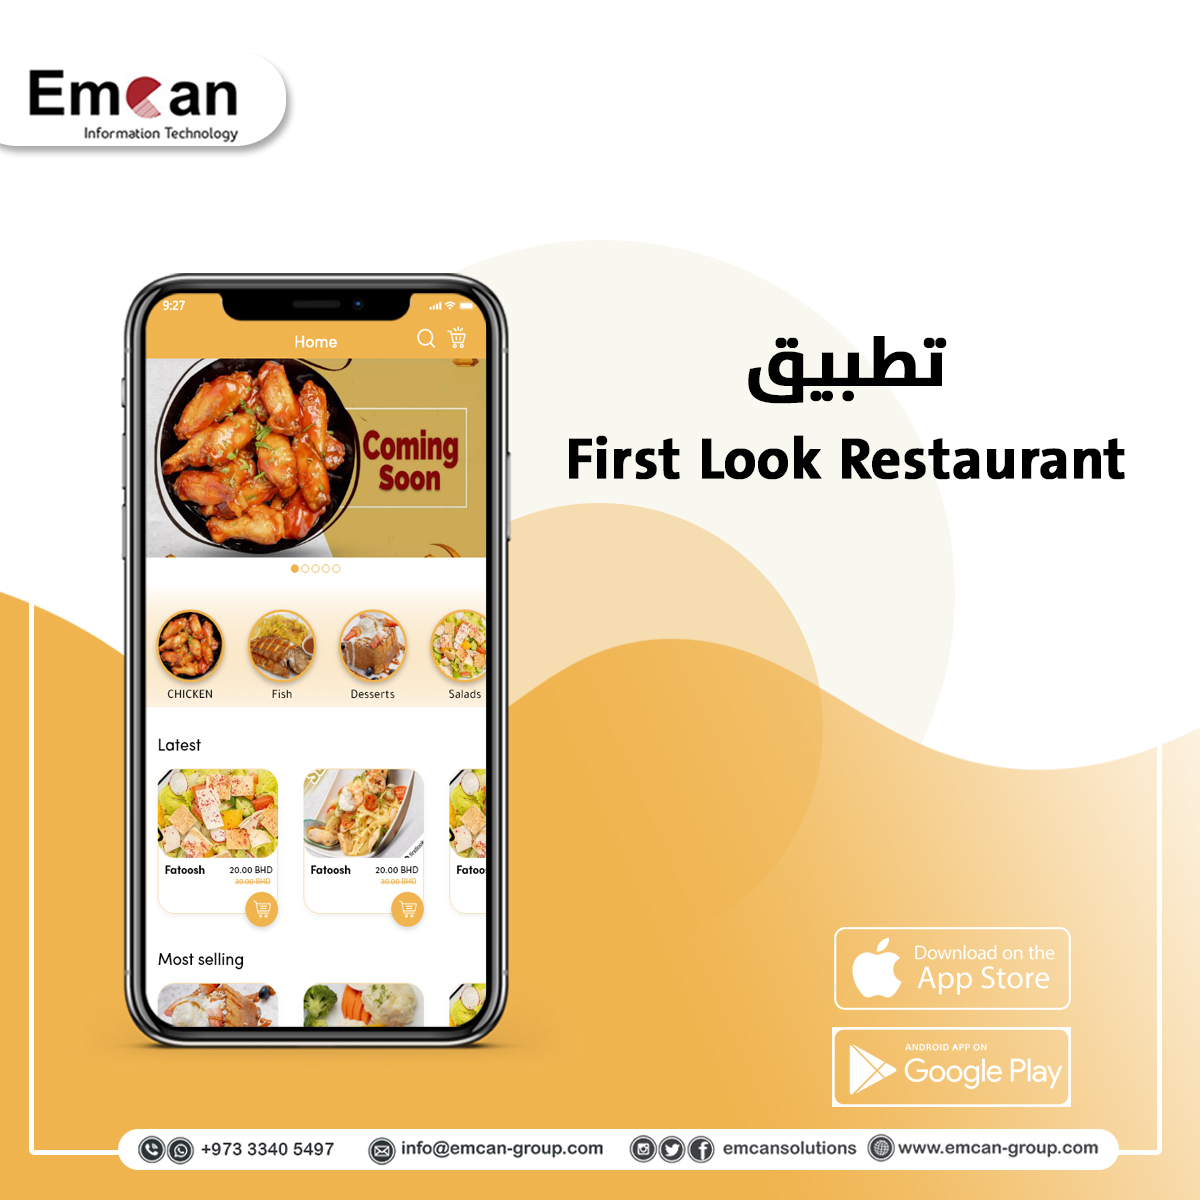 First Look Restaurant application